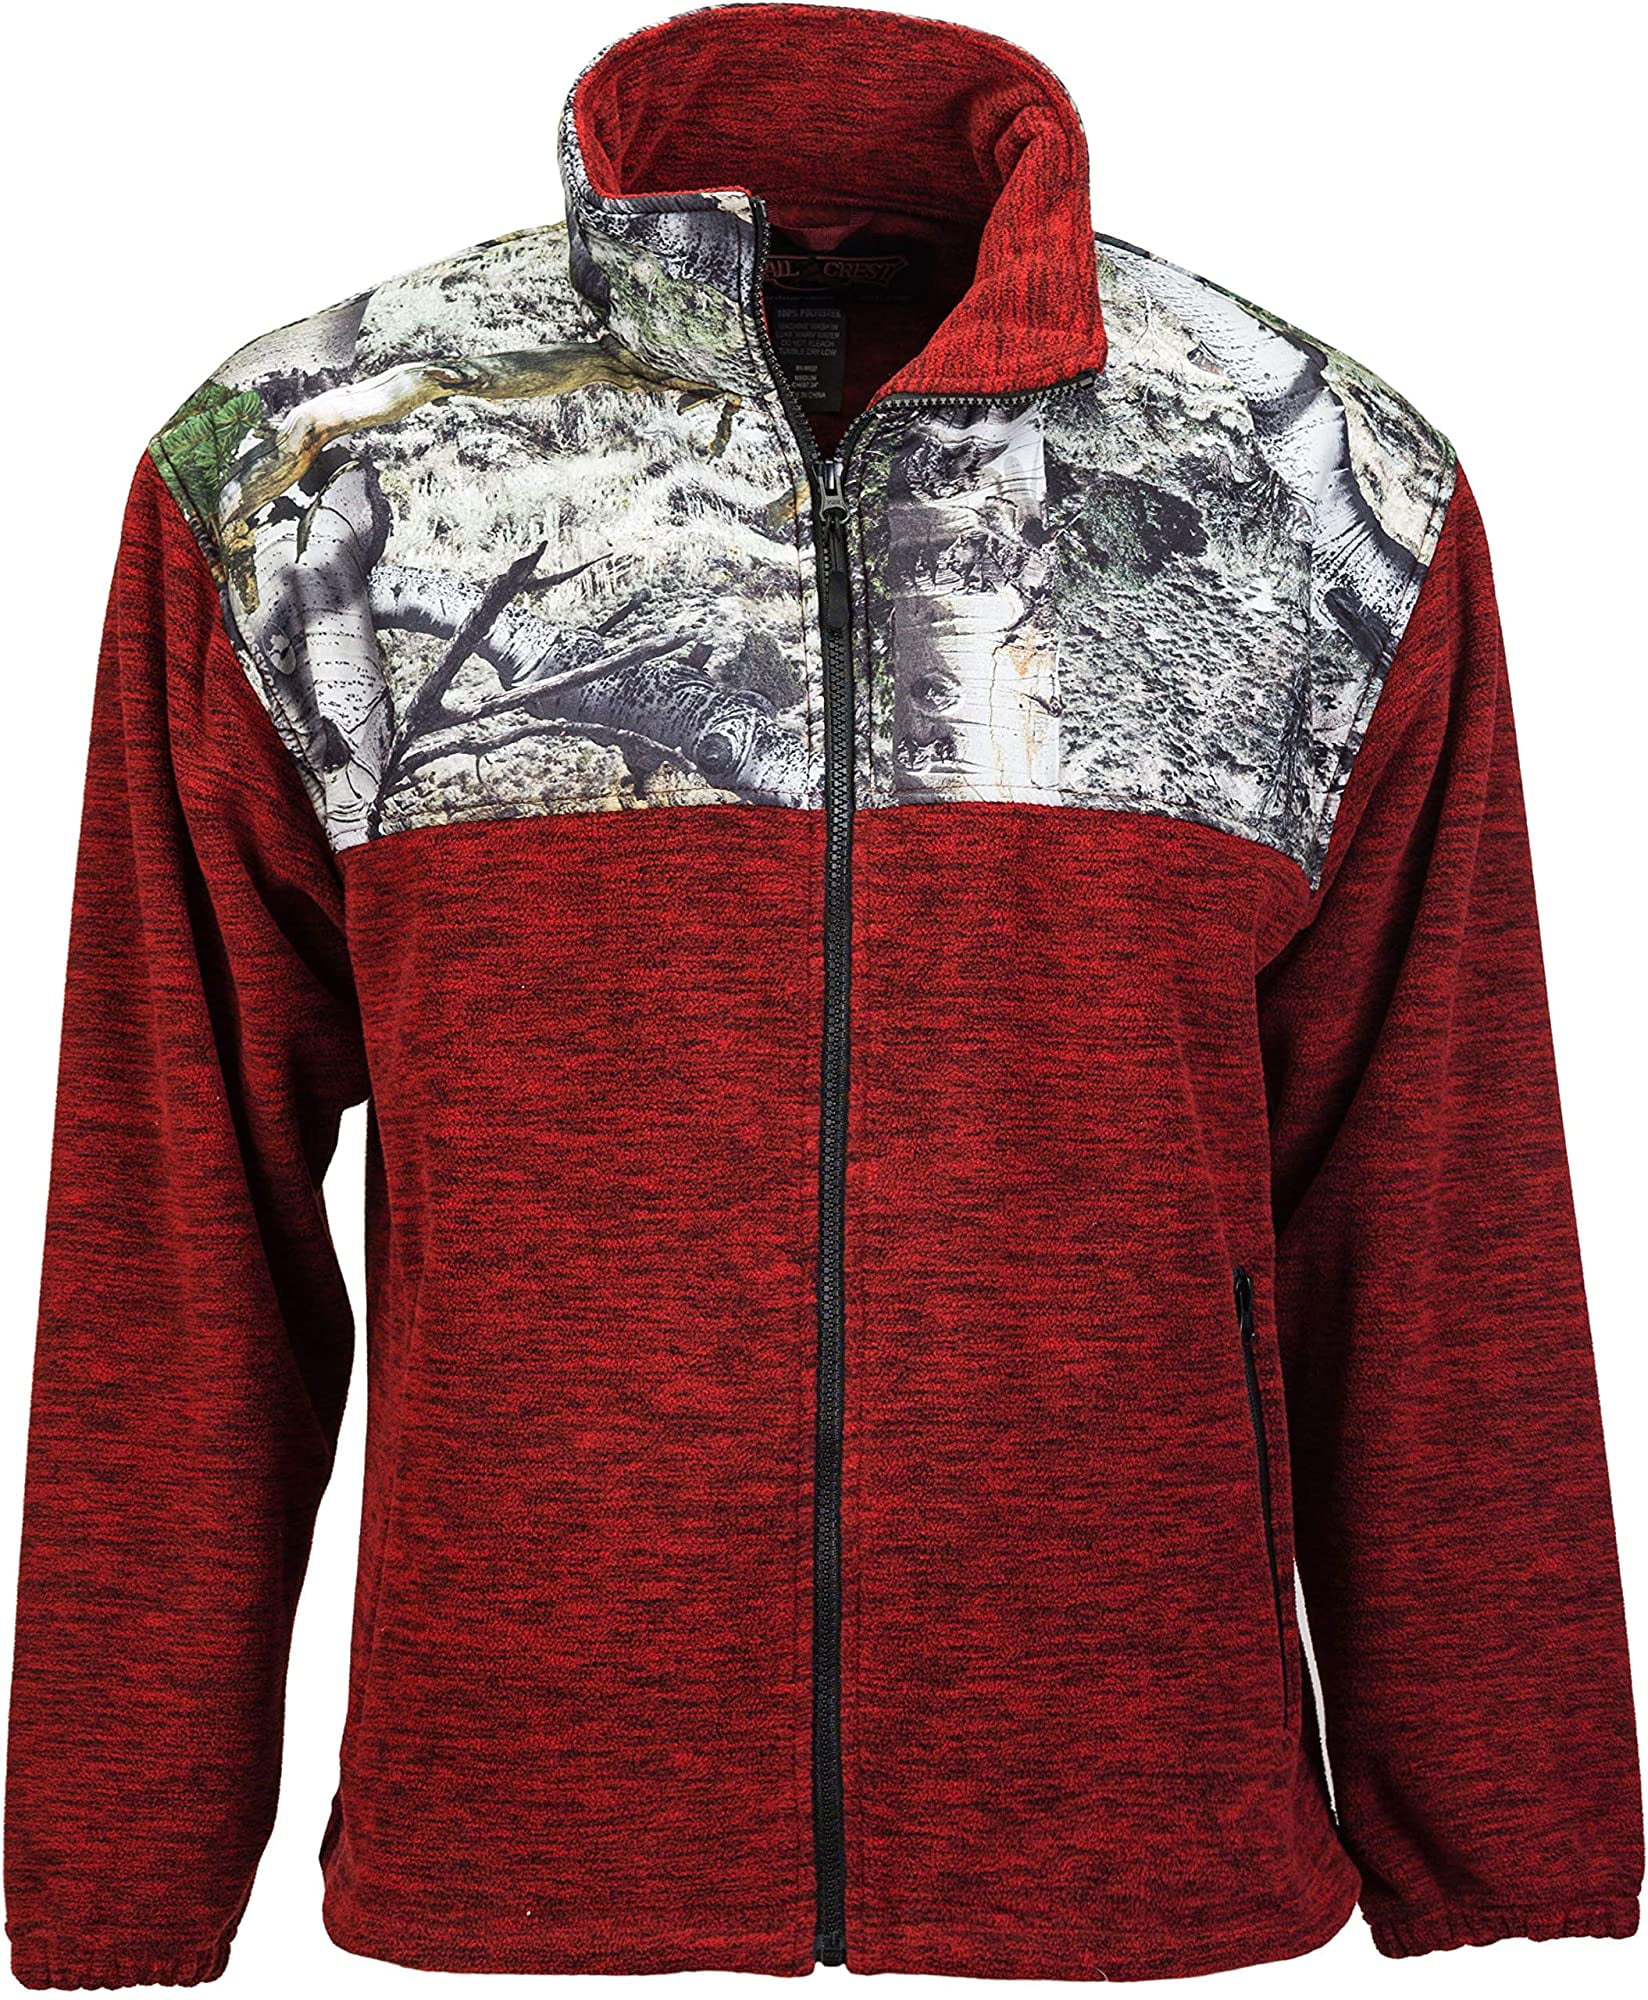 TrailCrest Childrens Fleece Jacket Full Zip Mossy Oak Camo Patterns C-Max